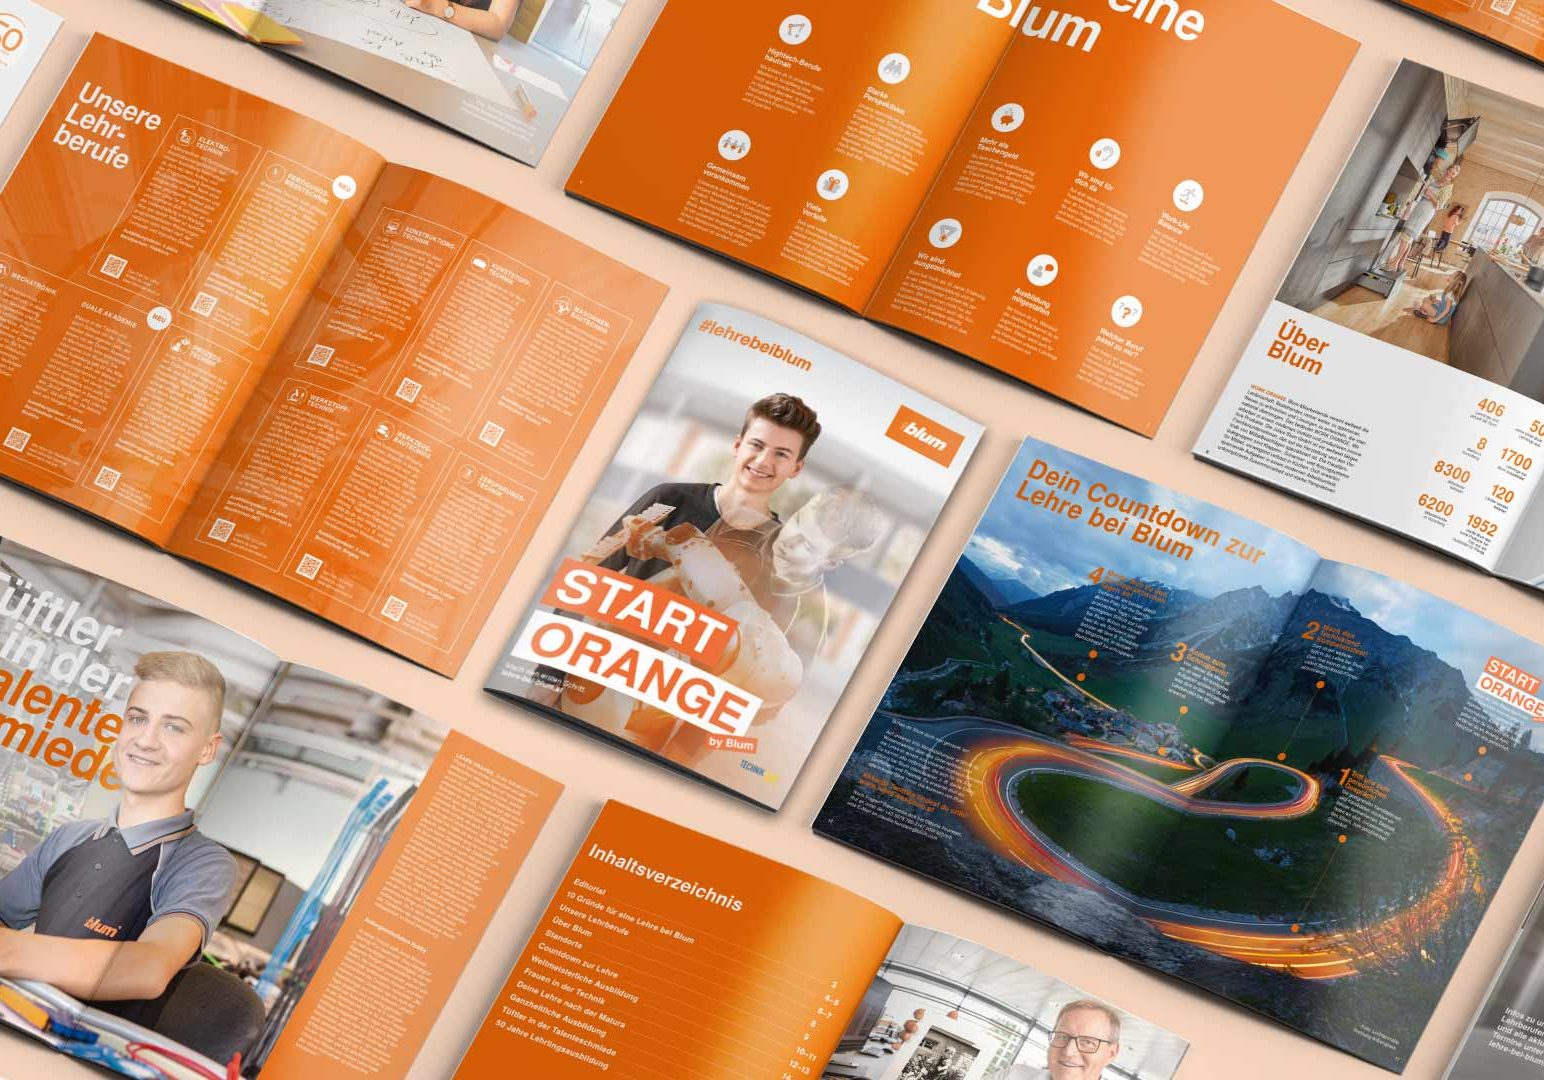 Blum Lehrlingswerbung Kampagne Start Orange Lehrlingsmagazin